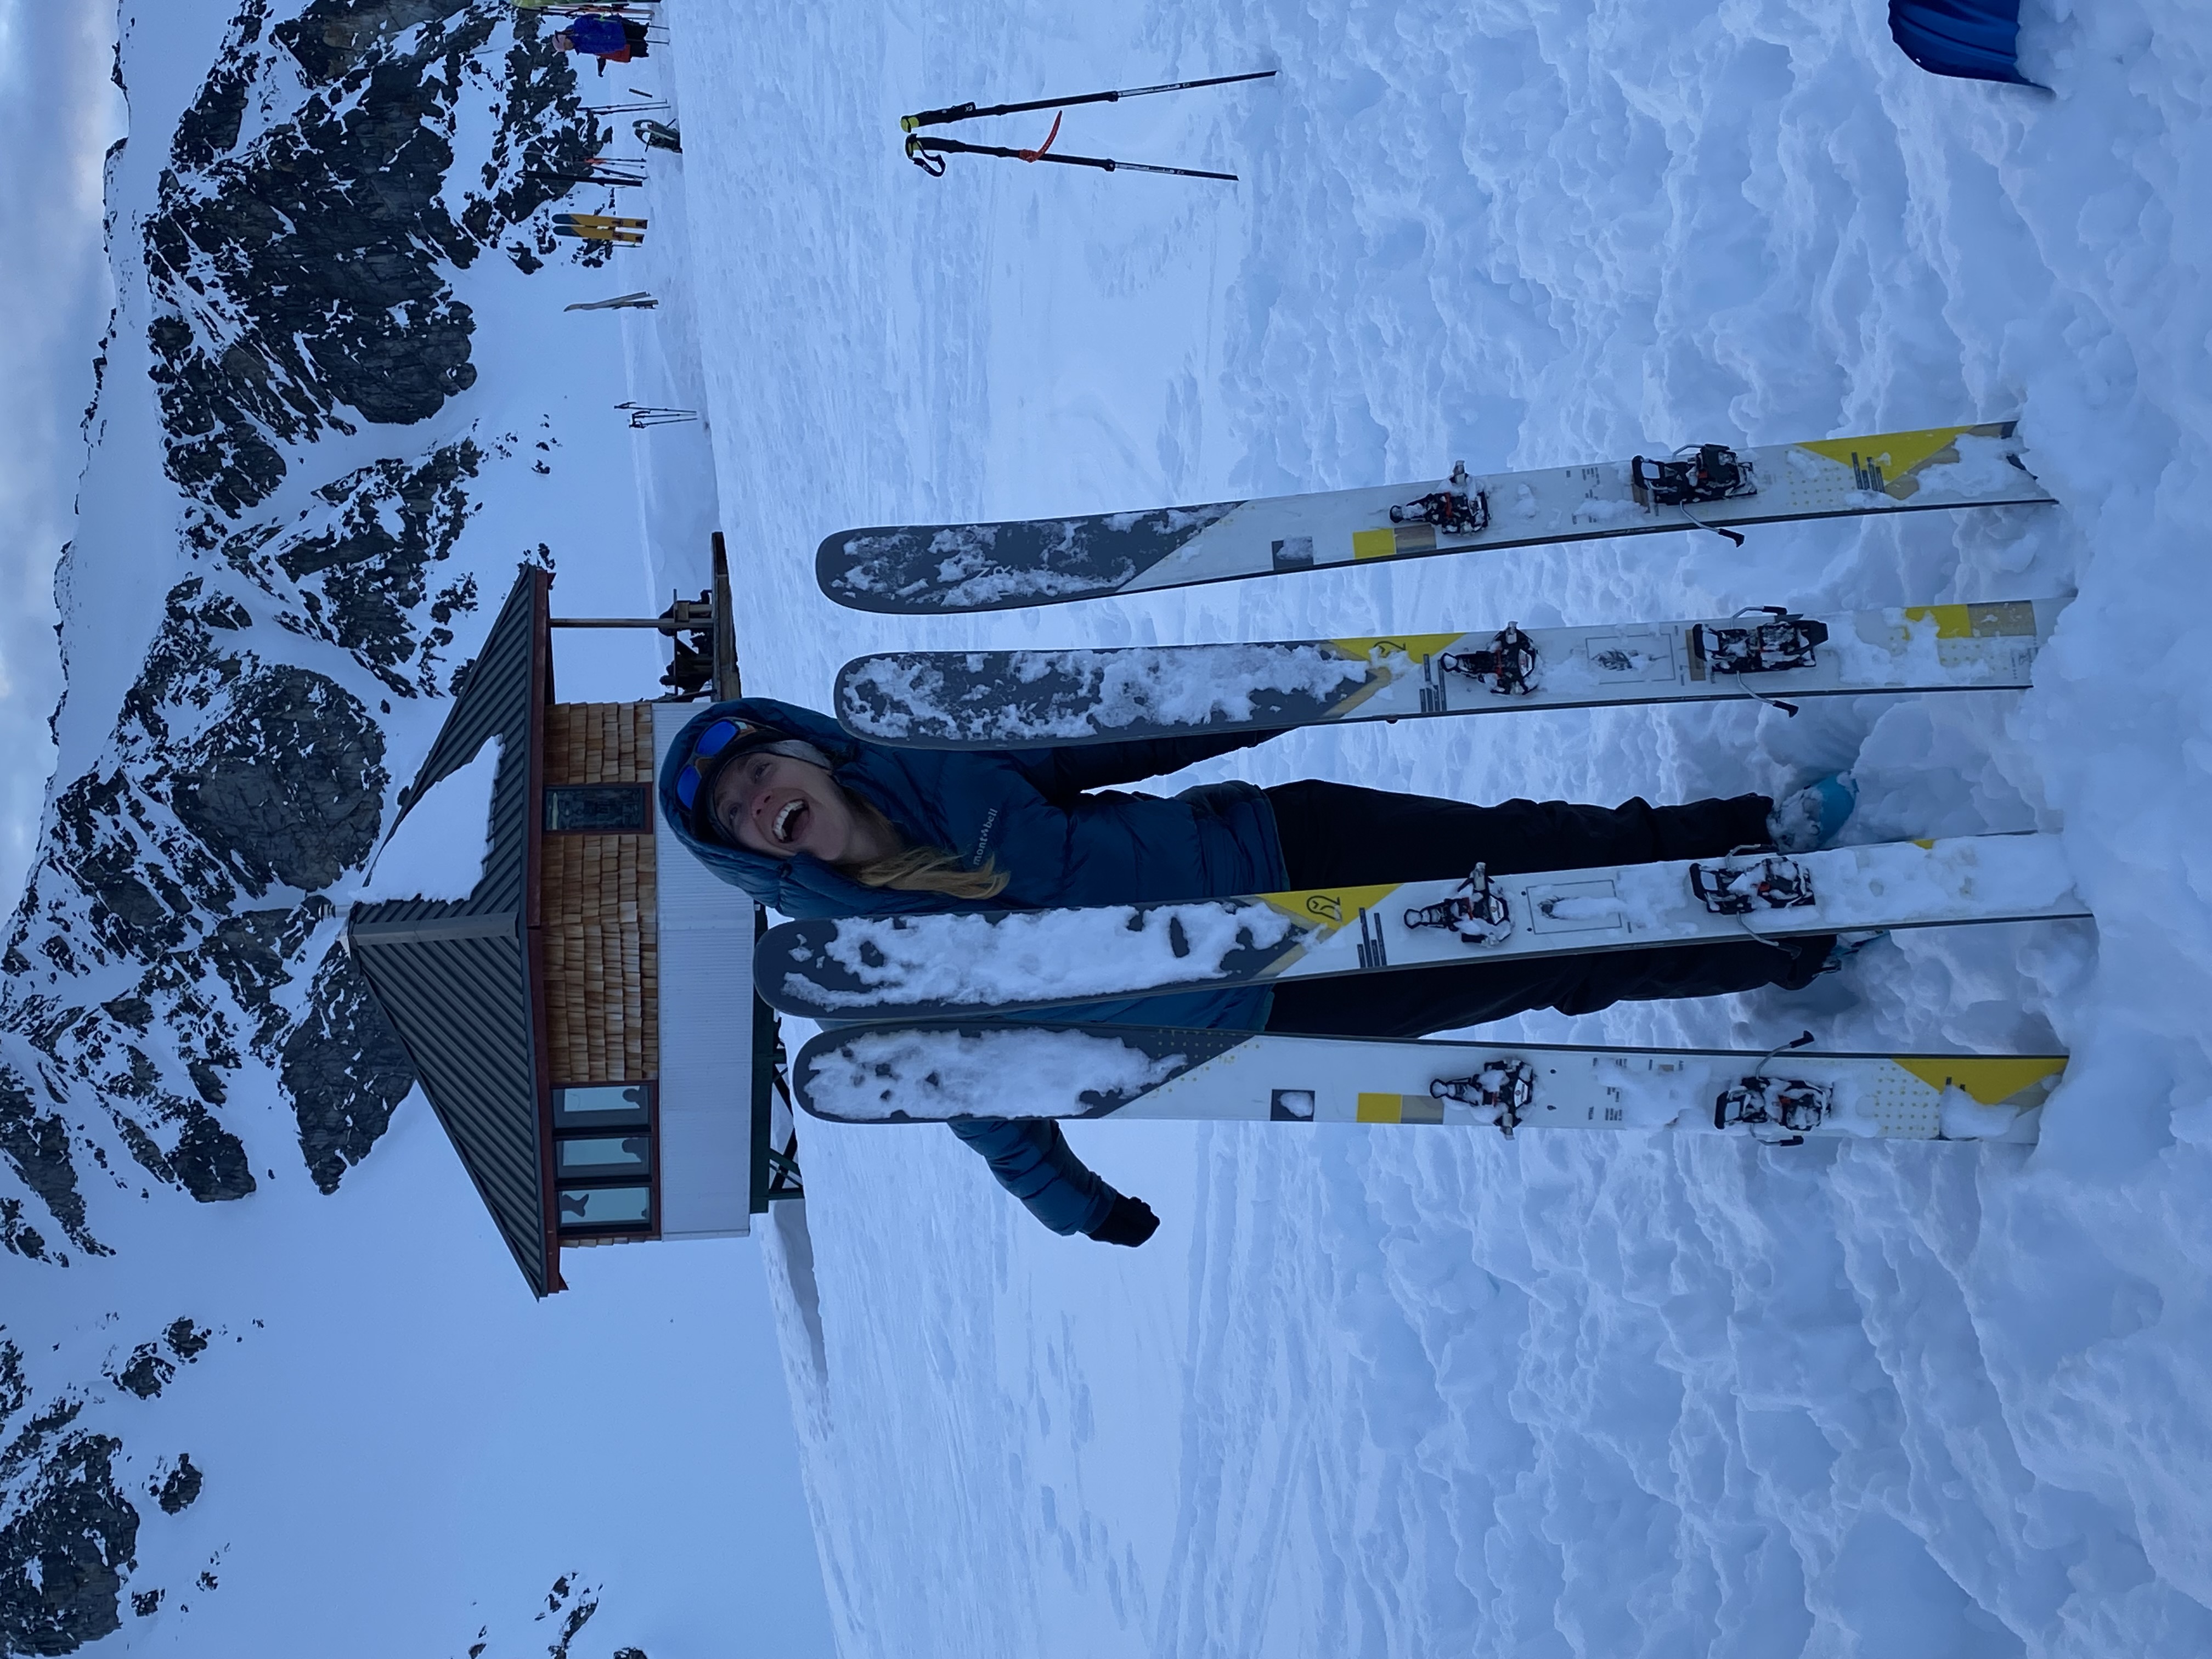 Karly with WNDR Vital skis at Snowbird Hut in Alaska